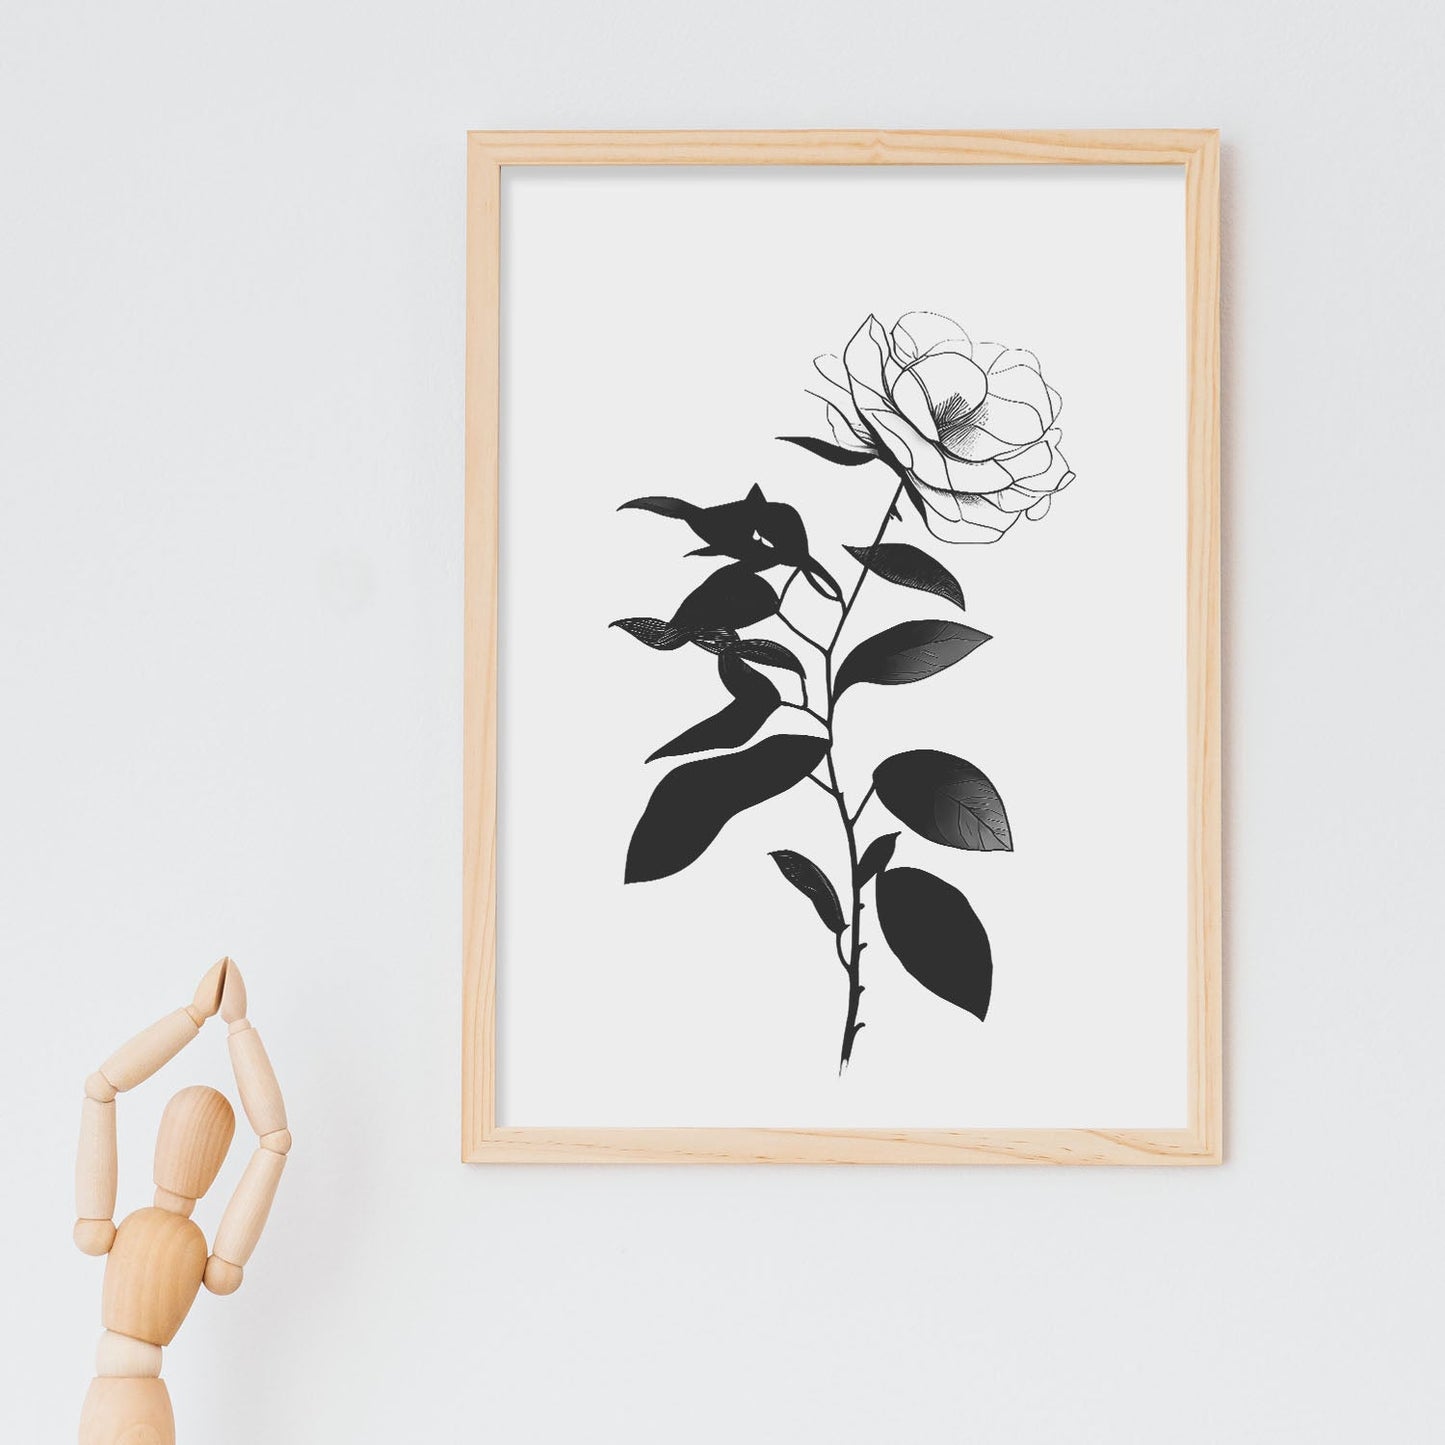 Nacnic Camellia Minimalist Line Art_2. Aesthetic Wall Art Prints for Bedroom or Living Room Design.